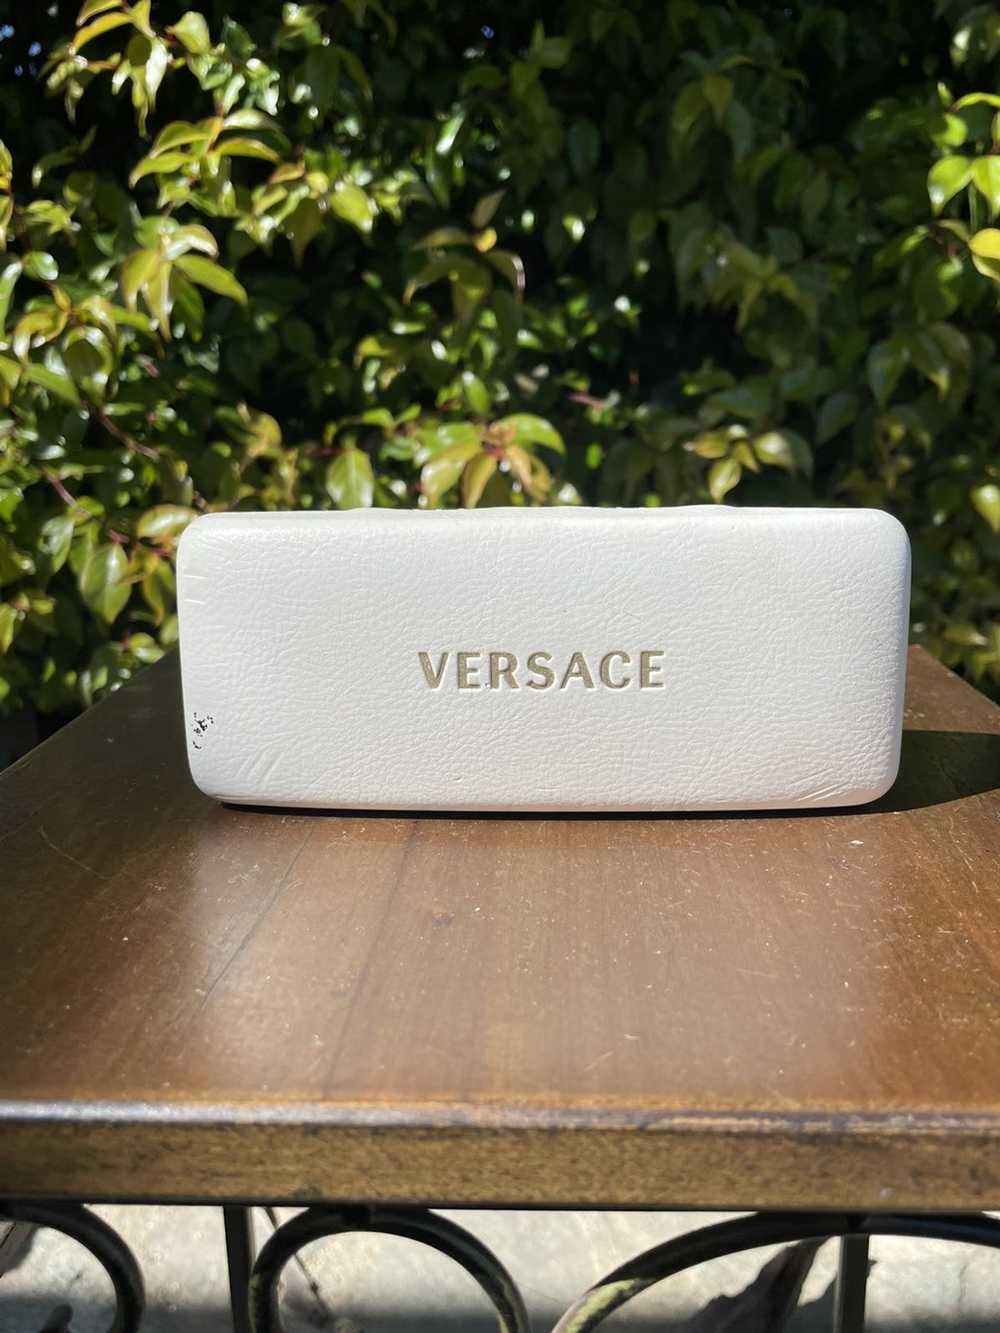 Versace VERSACE SUNGLASSES - image 4